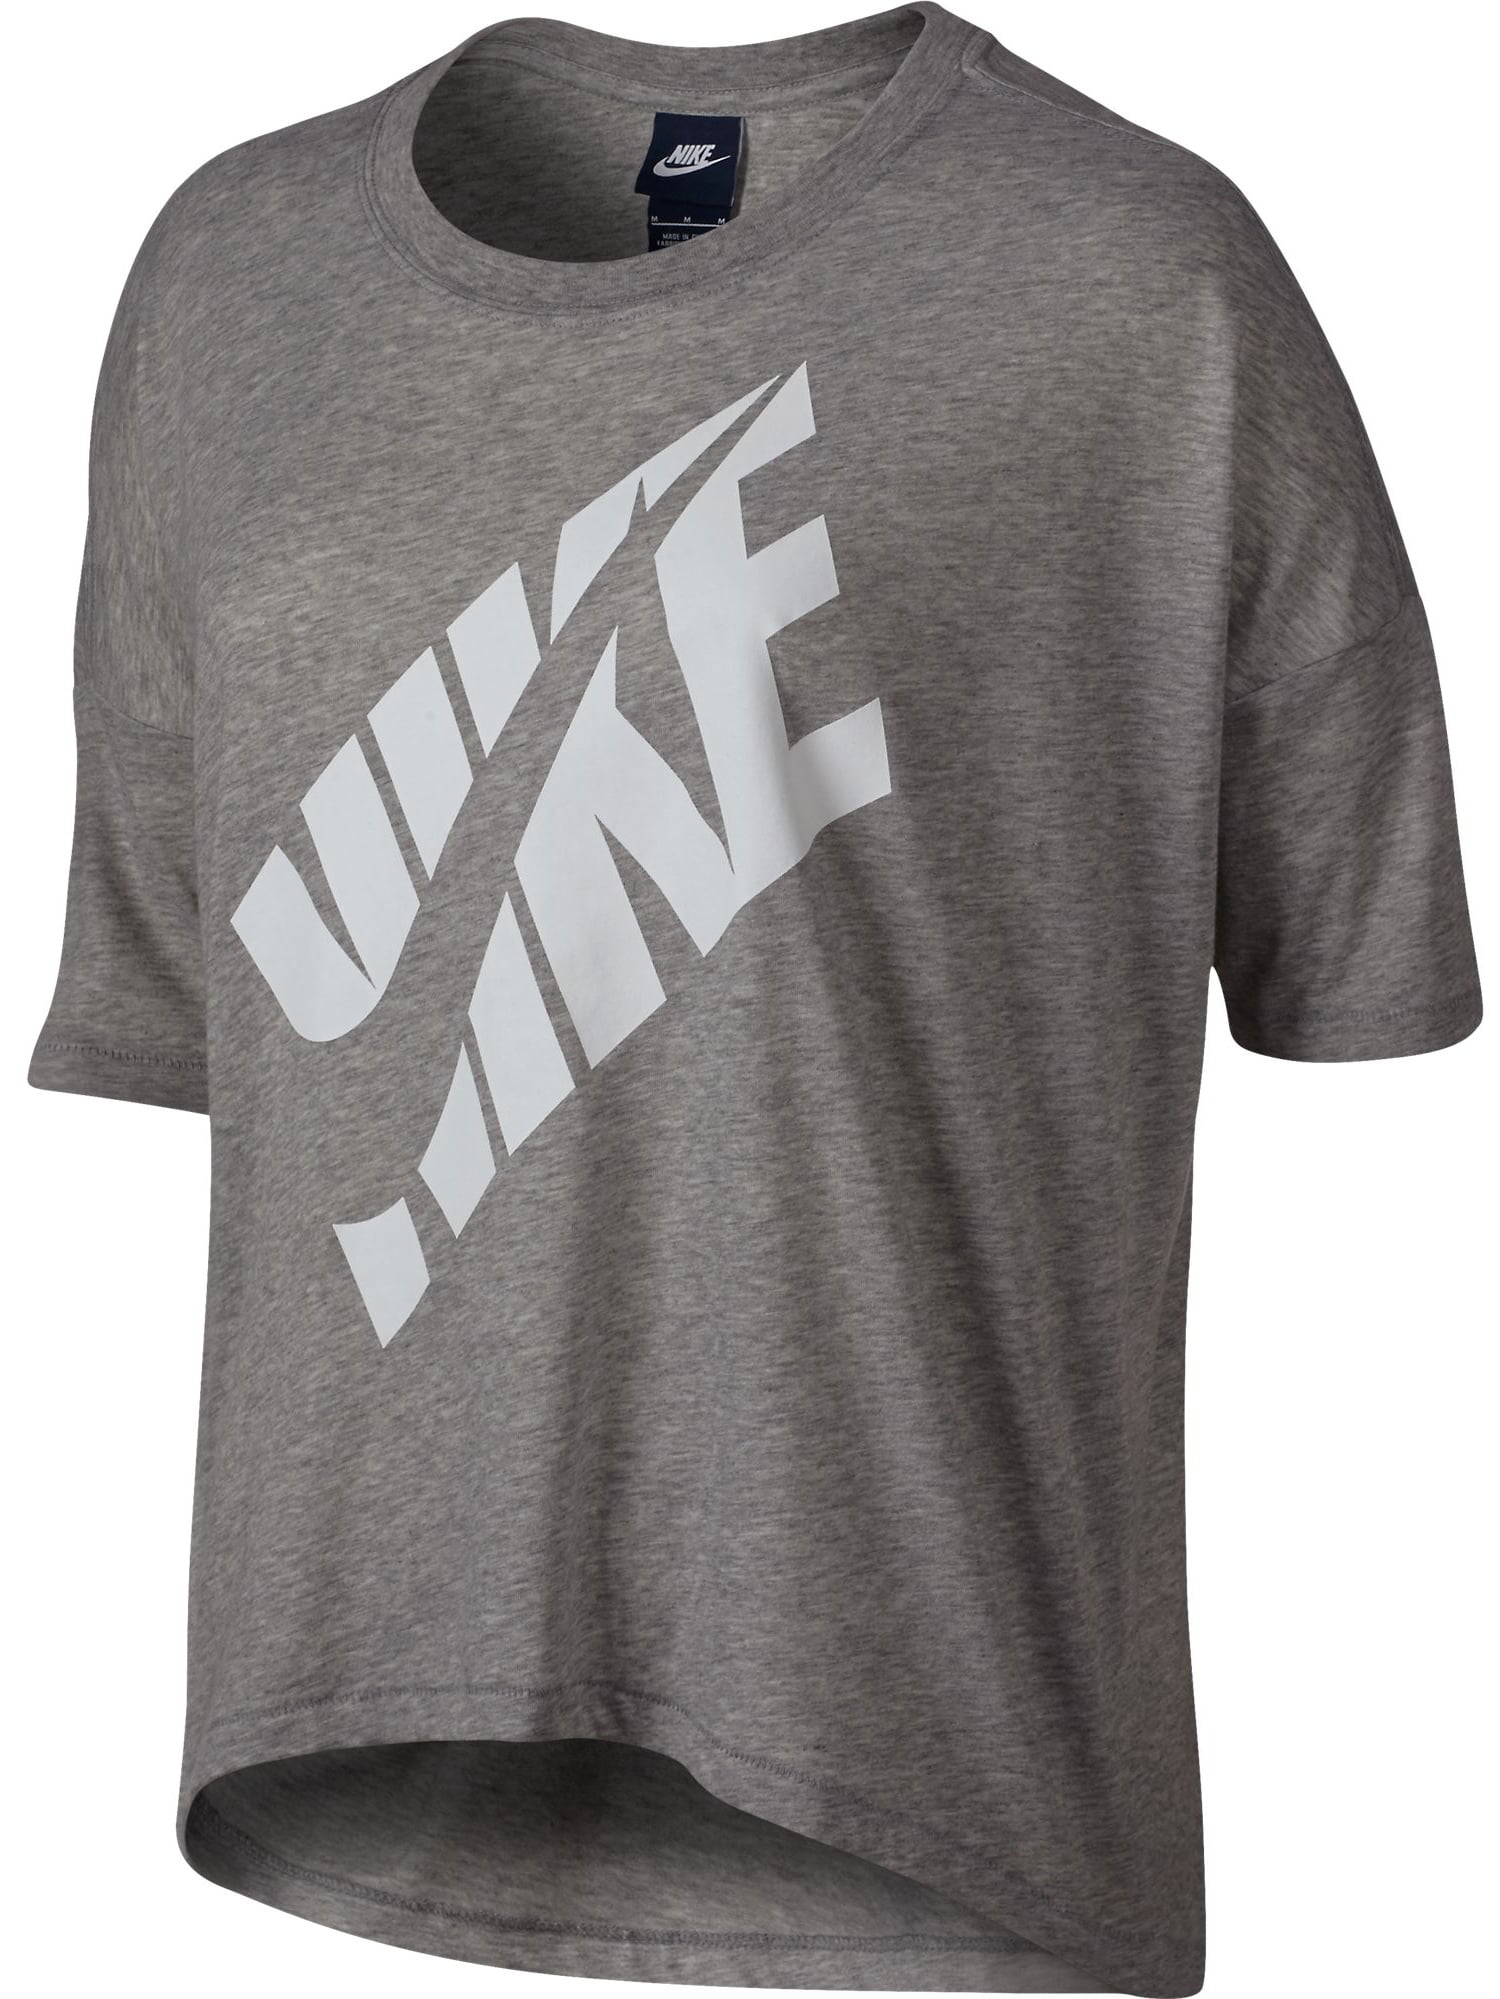 Nike - Nike Women's Prep Top T-Shirt Athletic Grey/White 829554-063 ...